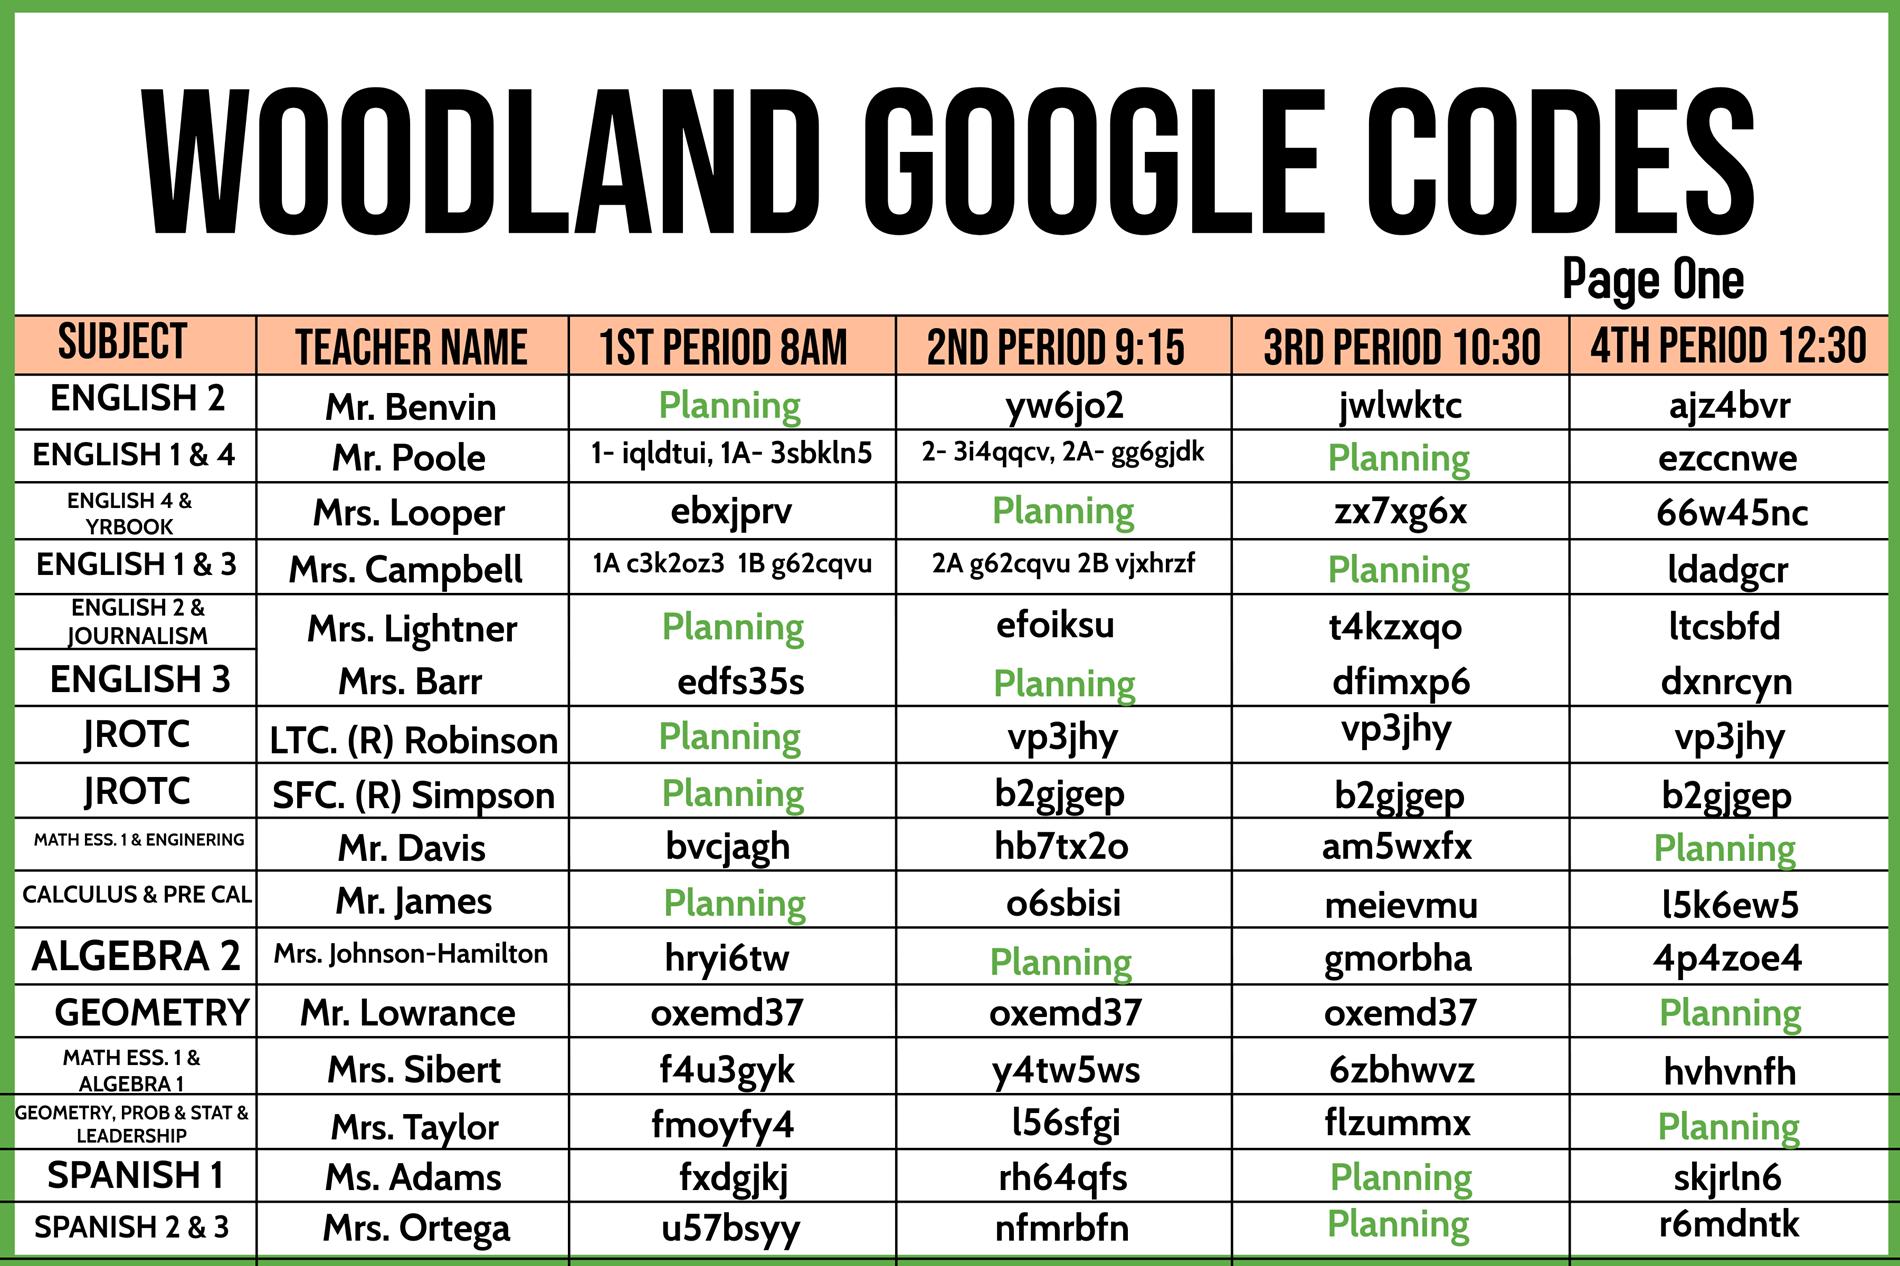 google classroom codes